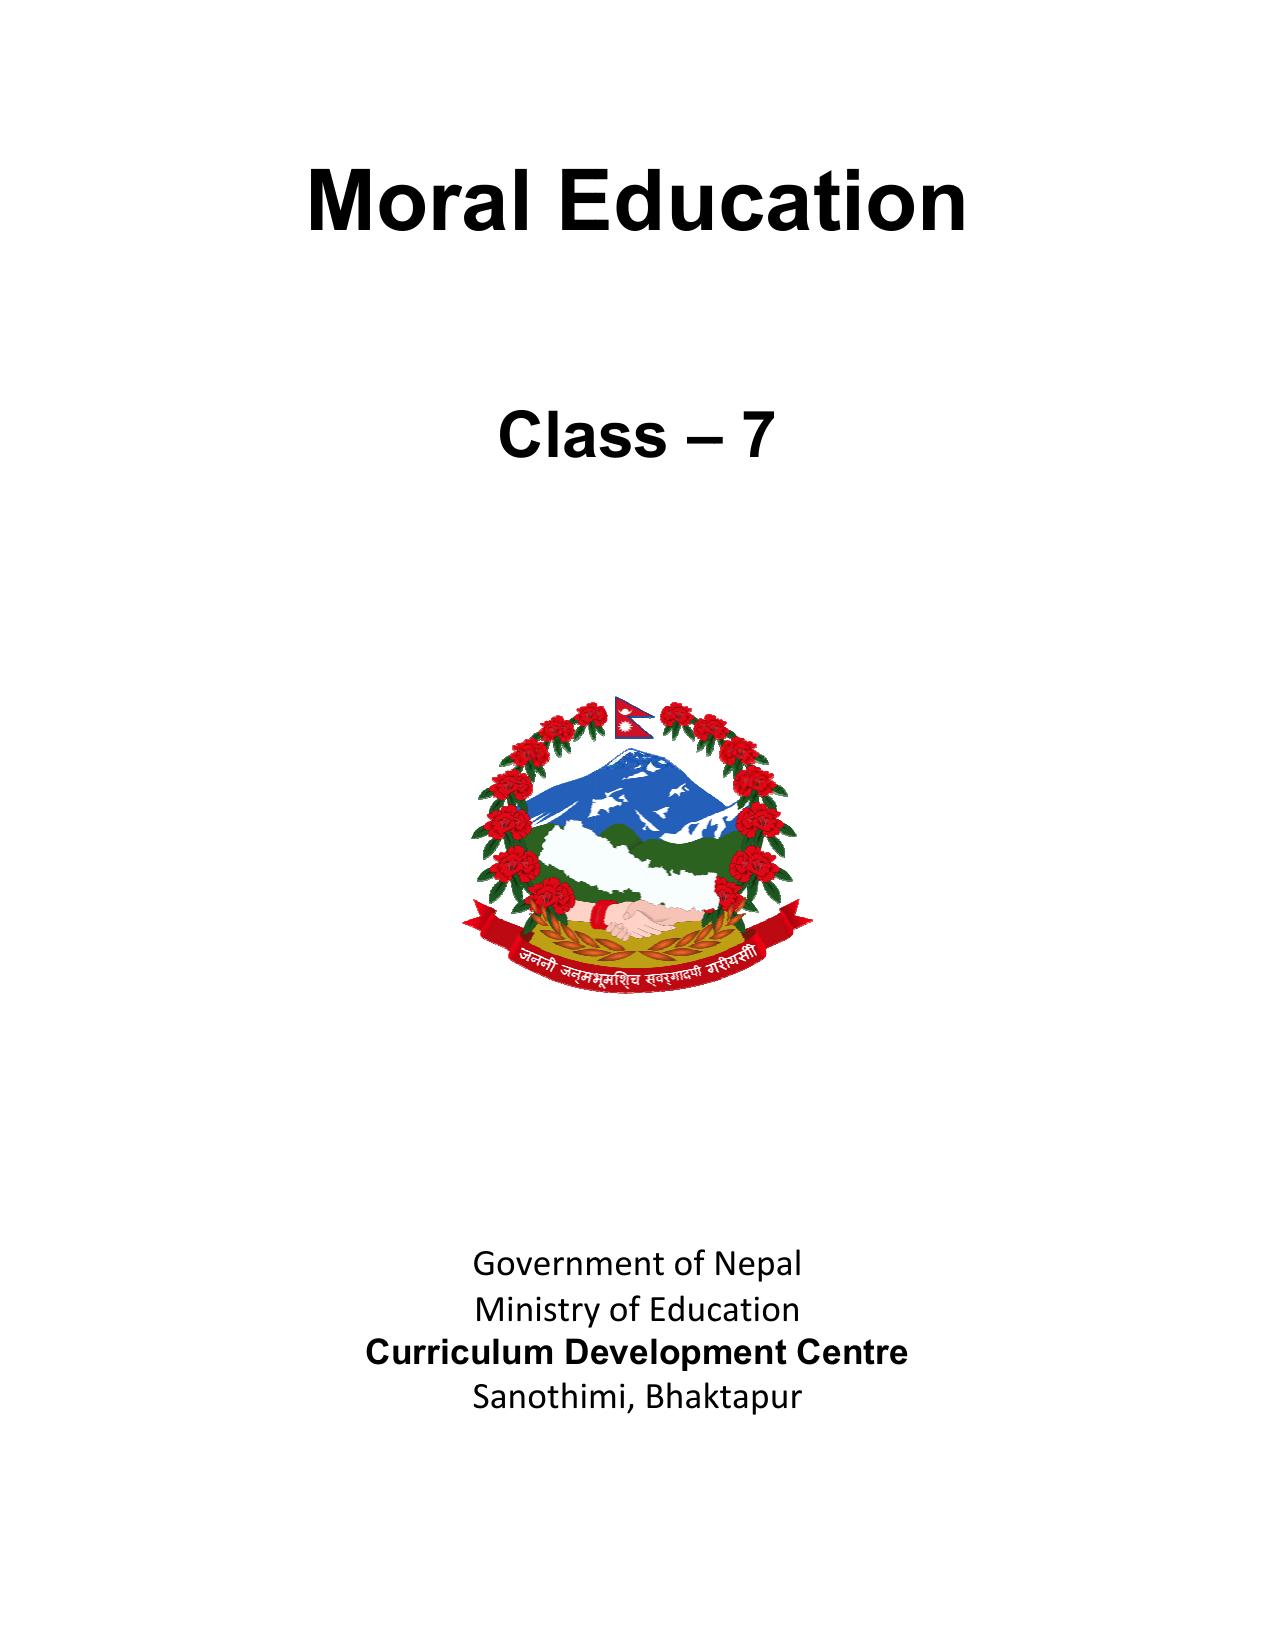 CDC 2017 - Moral Education Grade 7